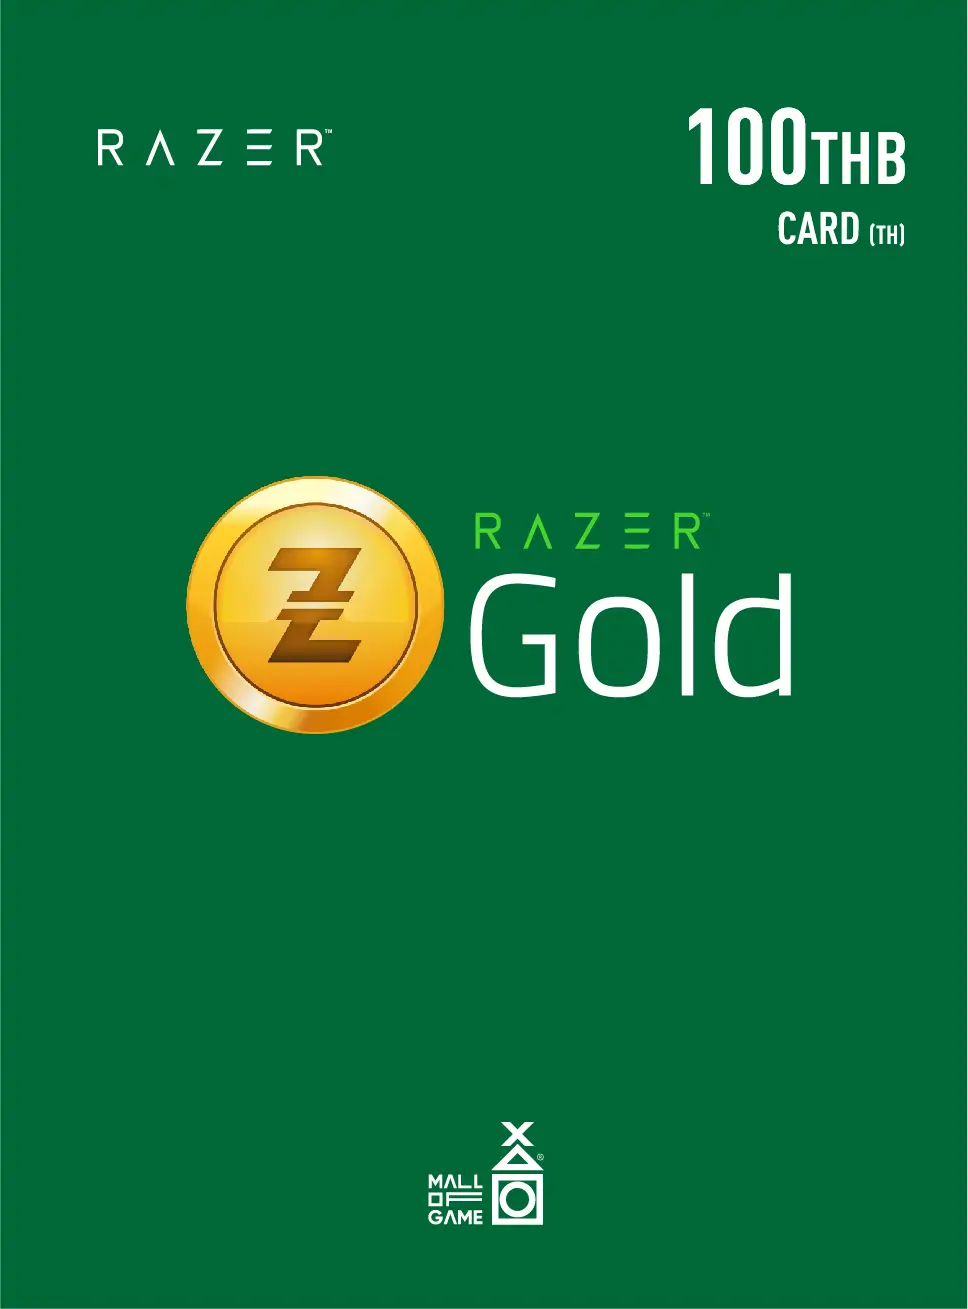 Razer Gold gift cards (global) _